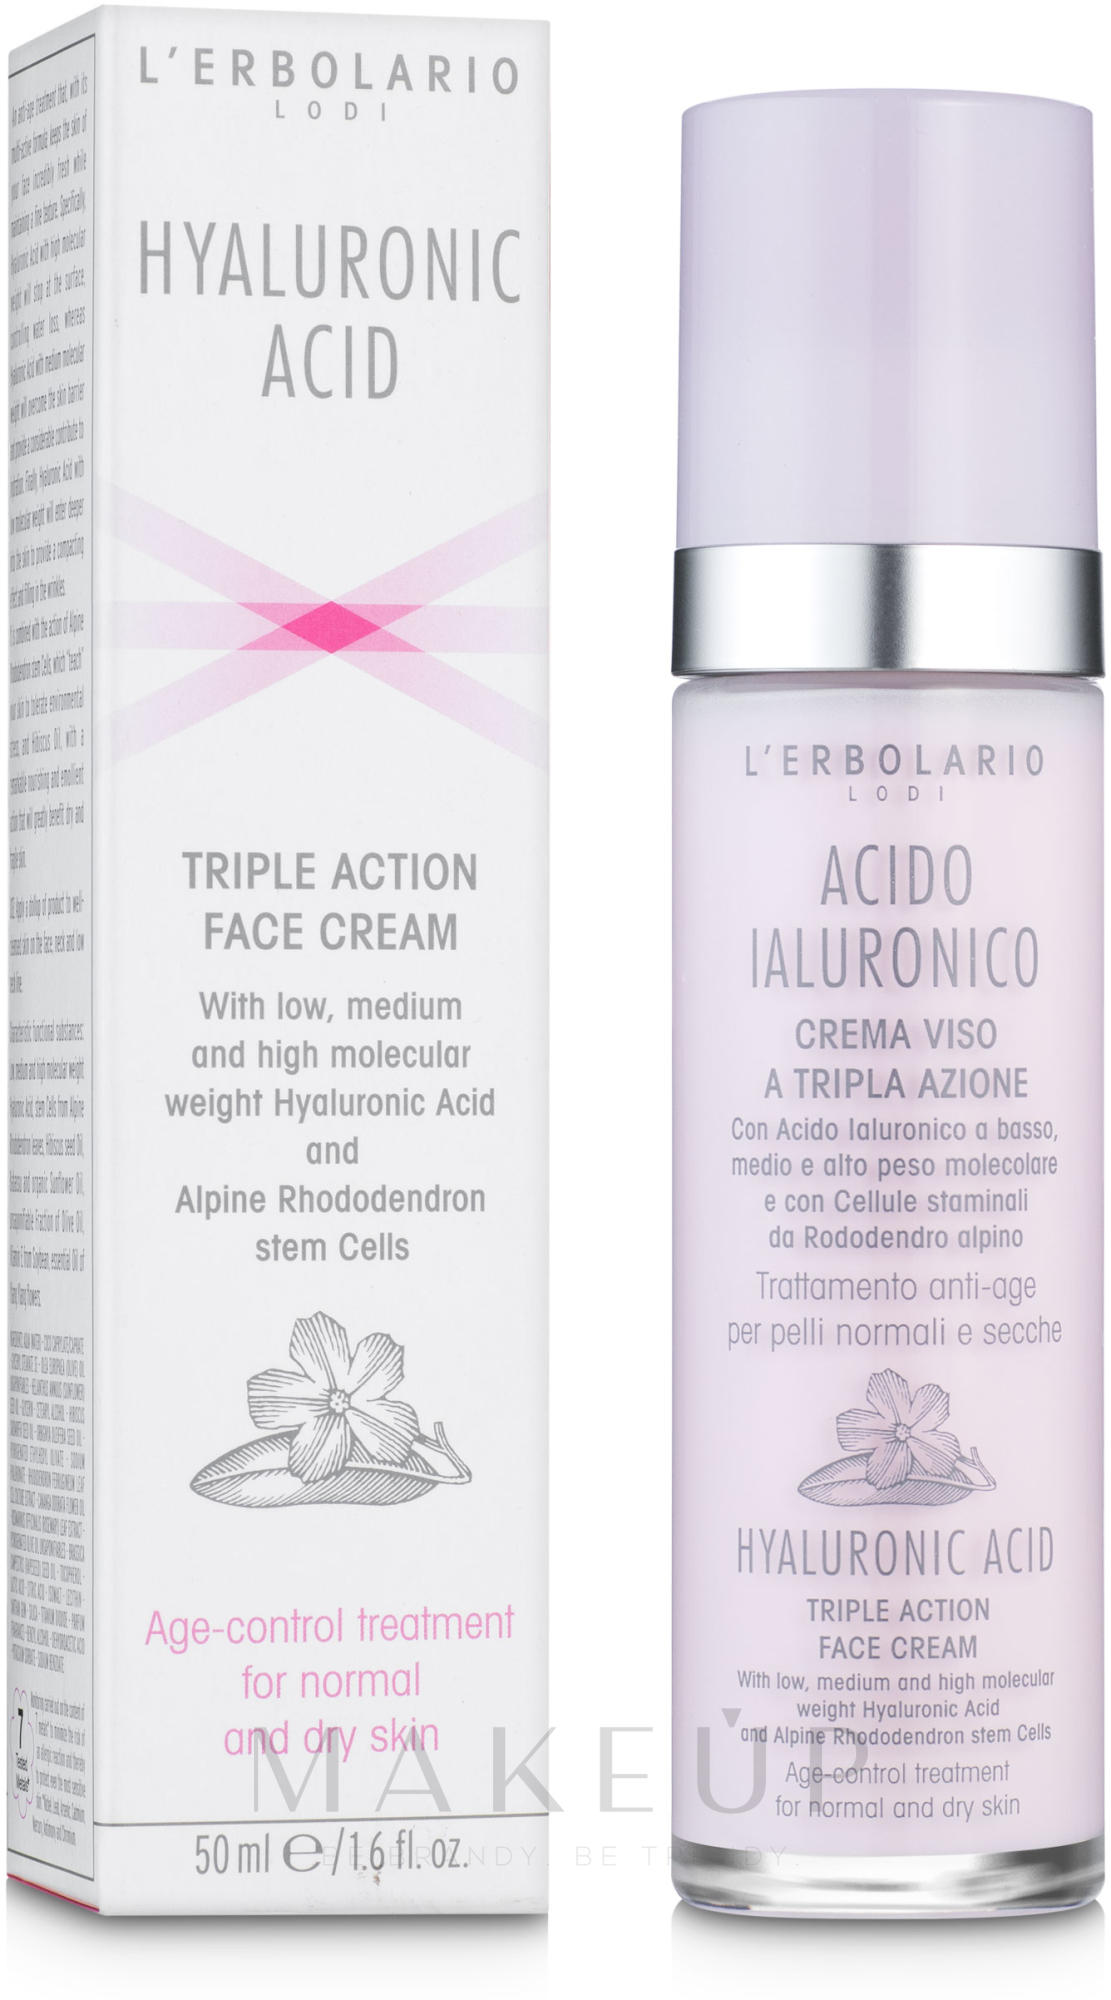 Anti-Aging Gesichtscreme für normale und trockene Haut mit Hyaluronsäure - L'Erbolario Acido Ialuronico Crema Viso a Tripla Azione  — Foto 50 ml